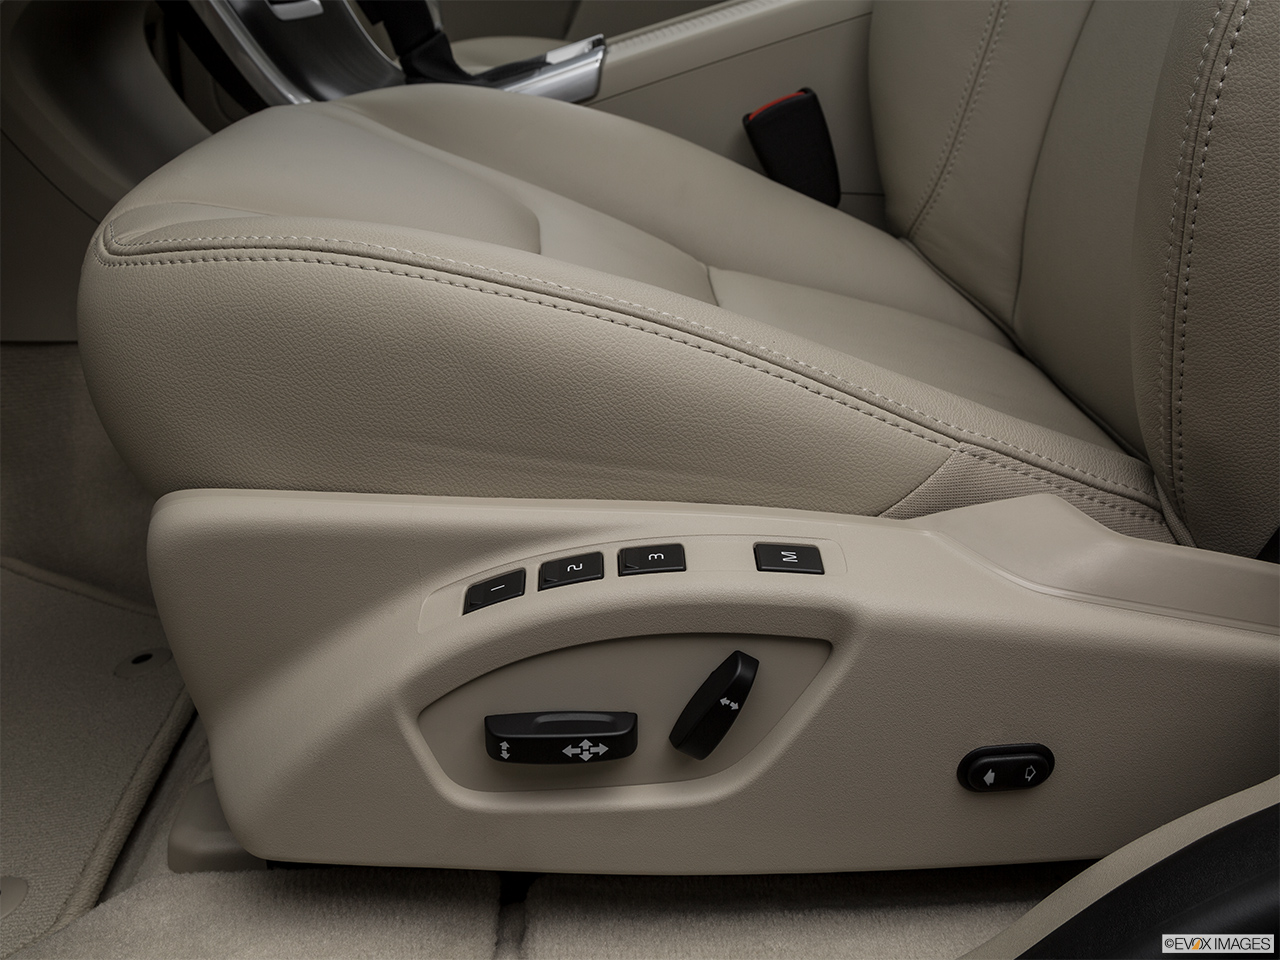 2016 Volvo XC60 T5 Drive-E FWD Premier Seat Adjustment Controllers. 